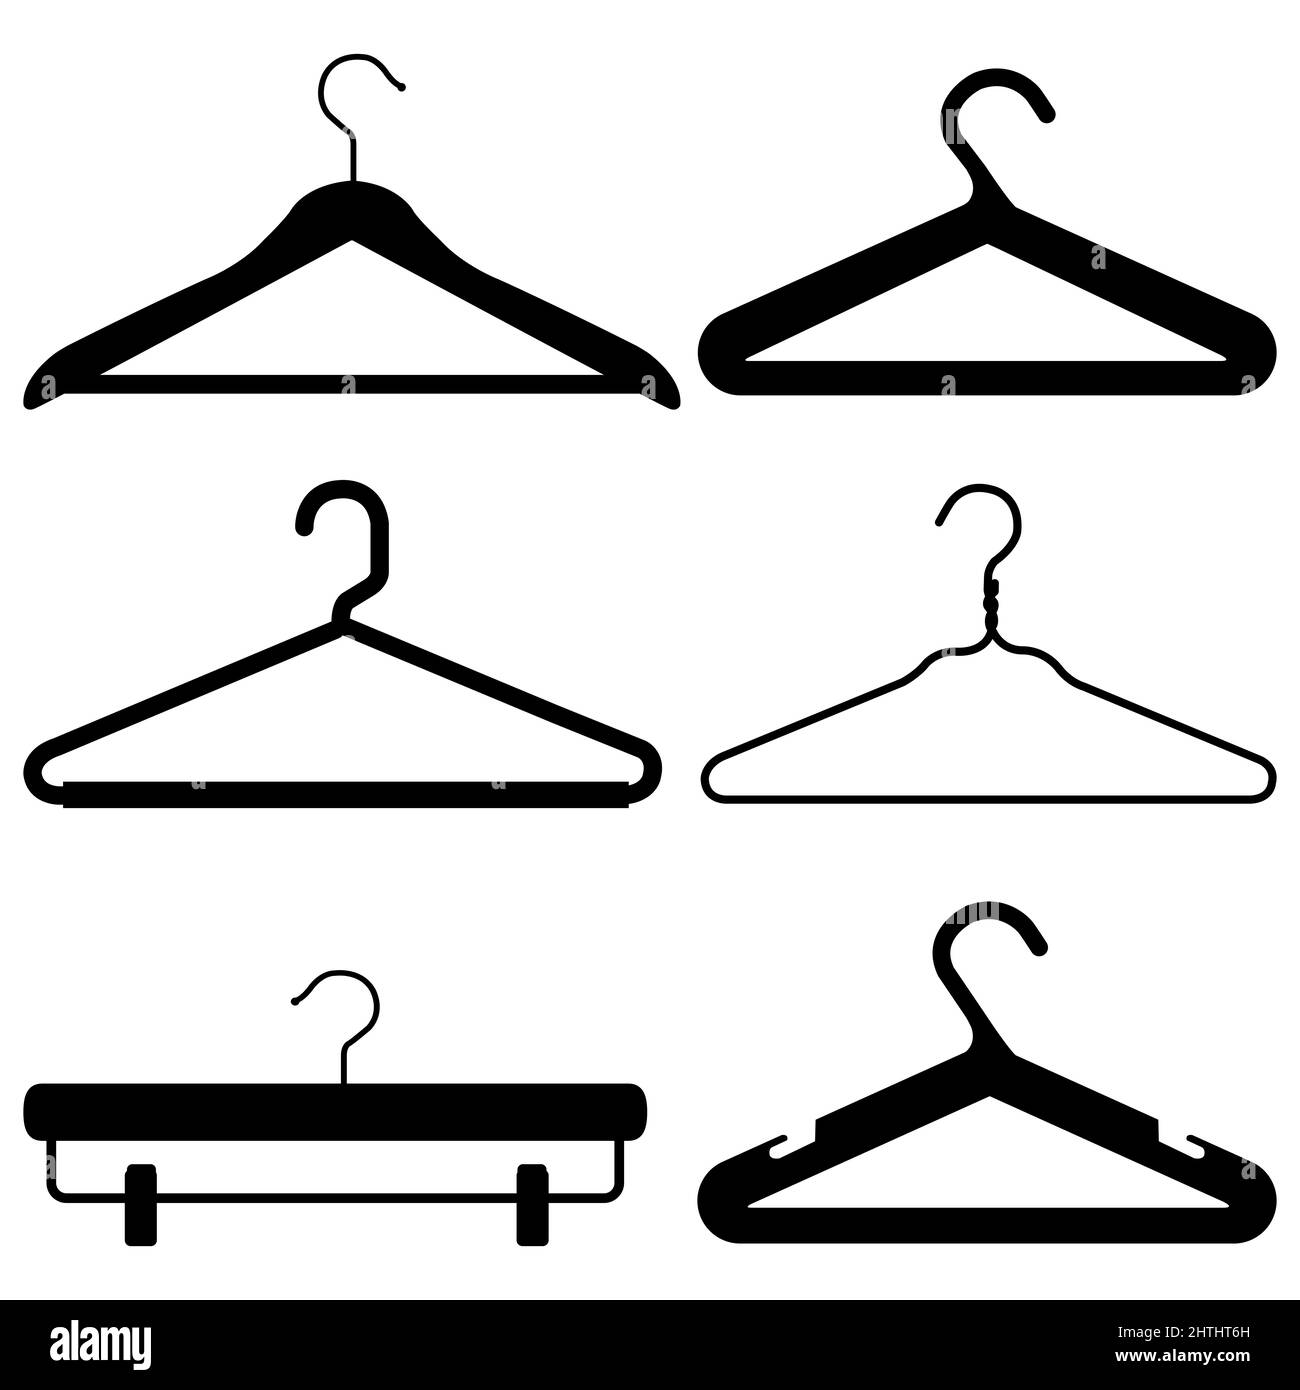 Clothes hangers icon set on white background. Stock Photo